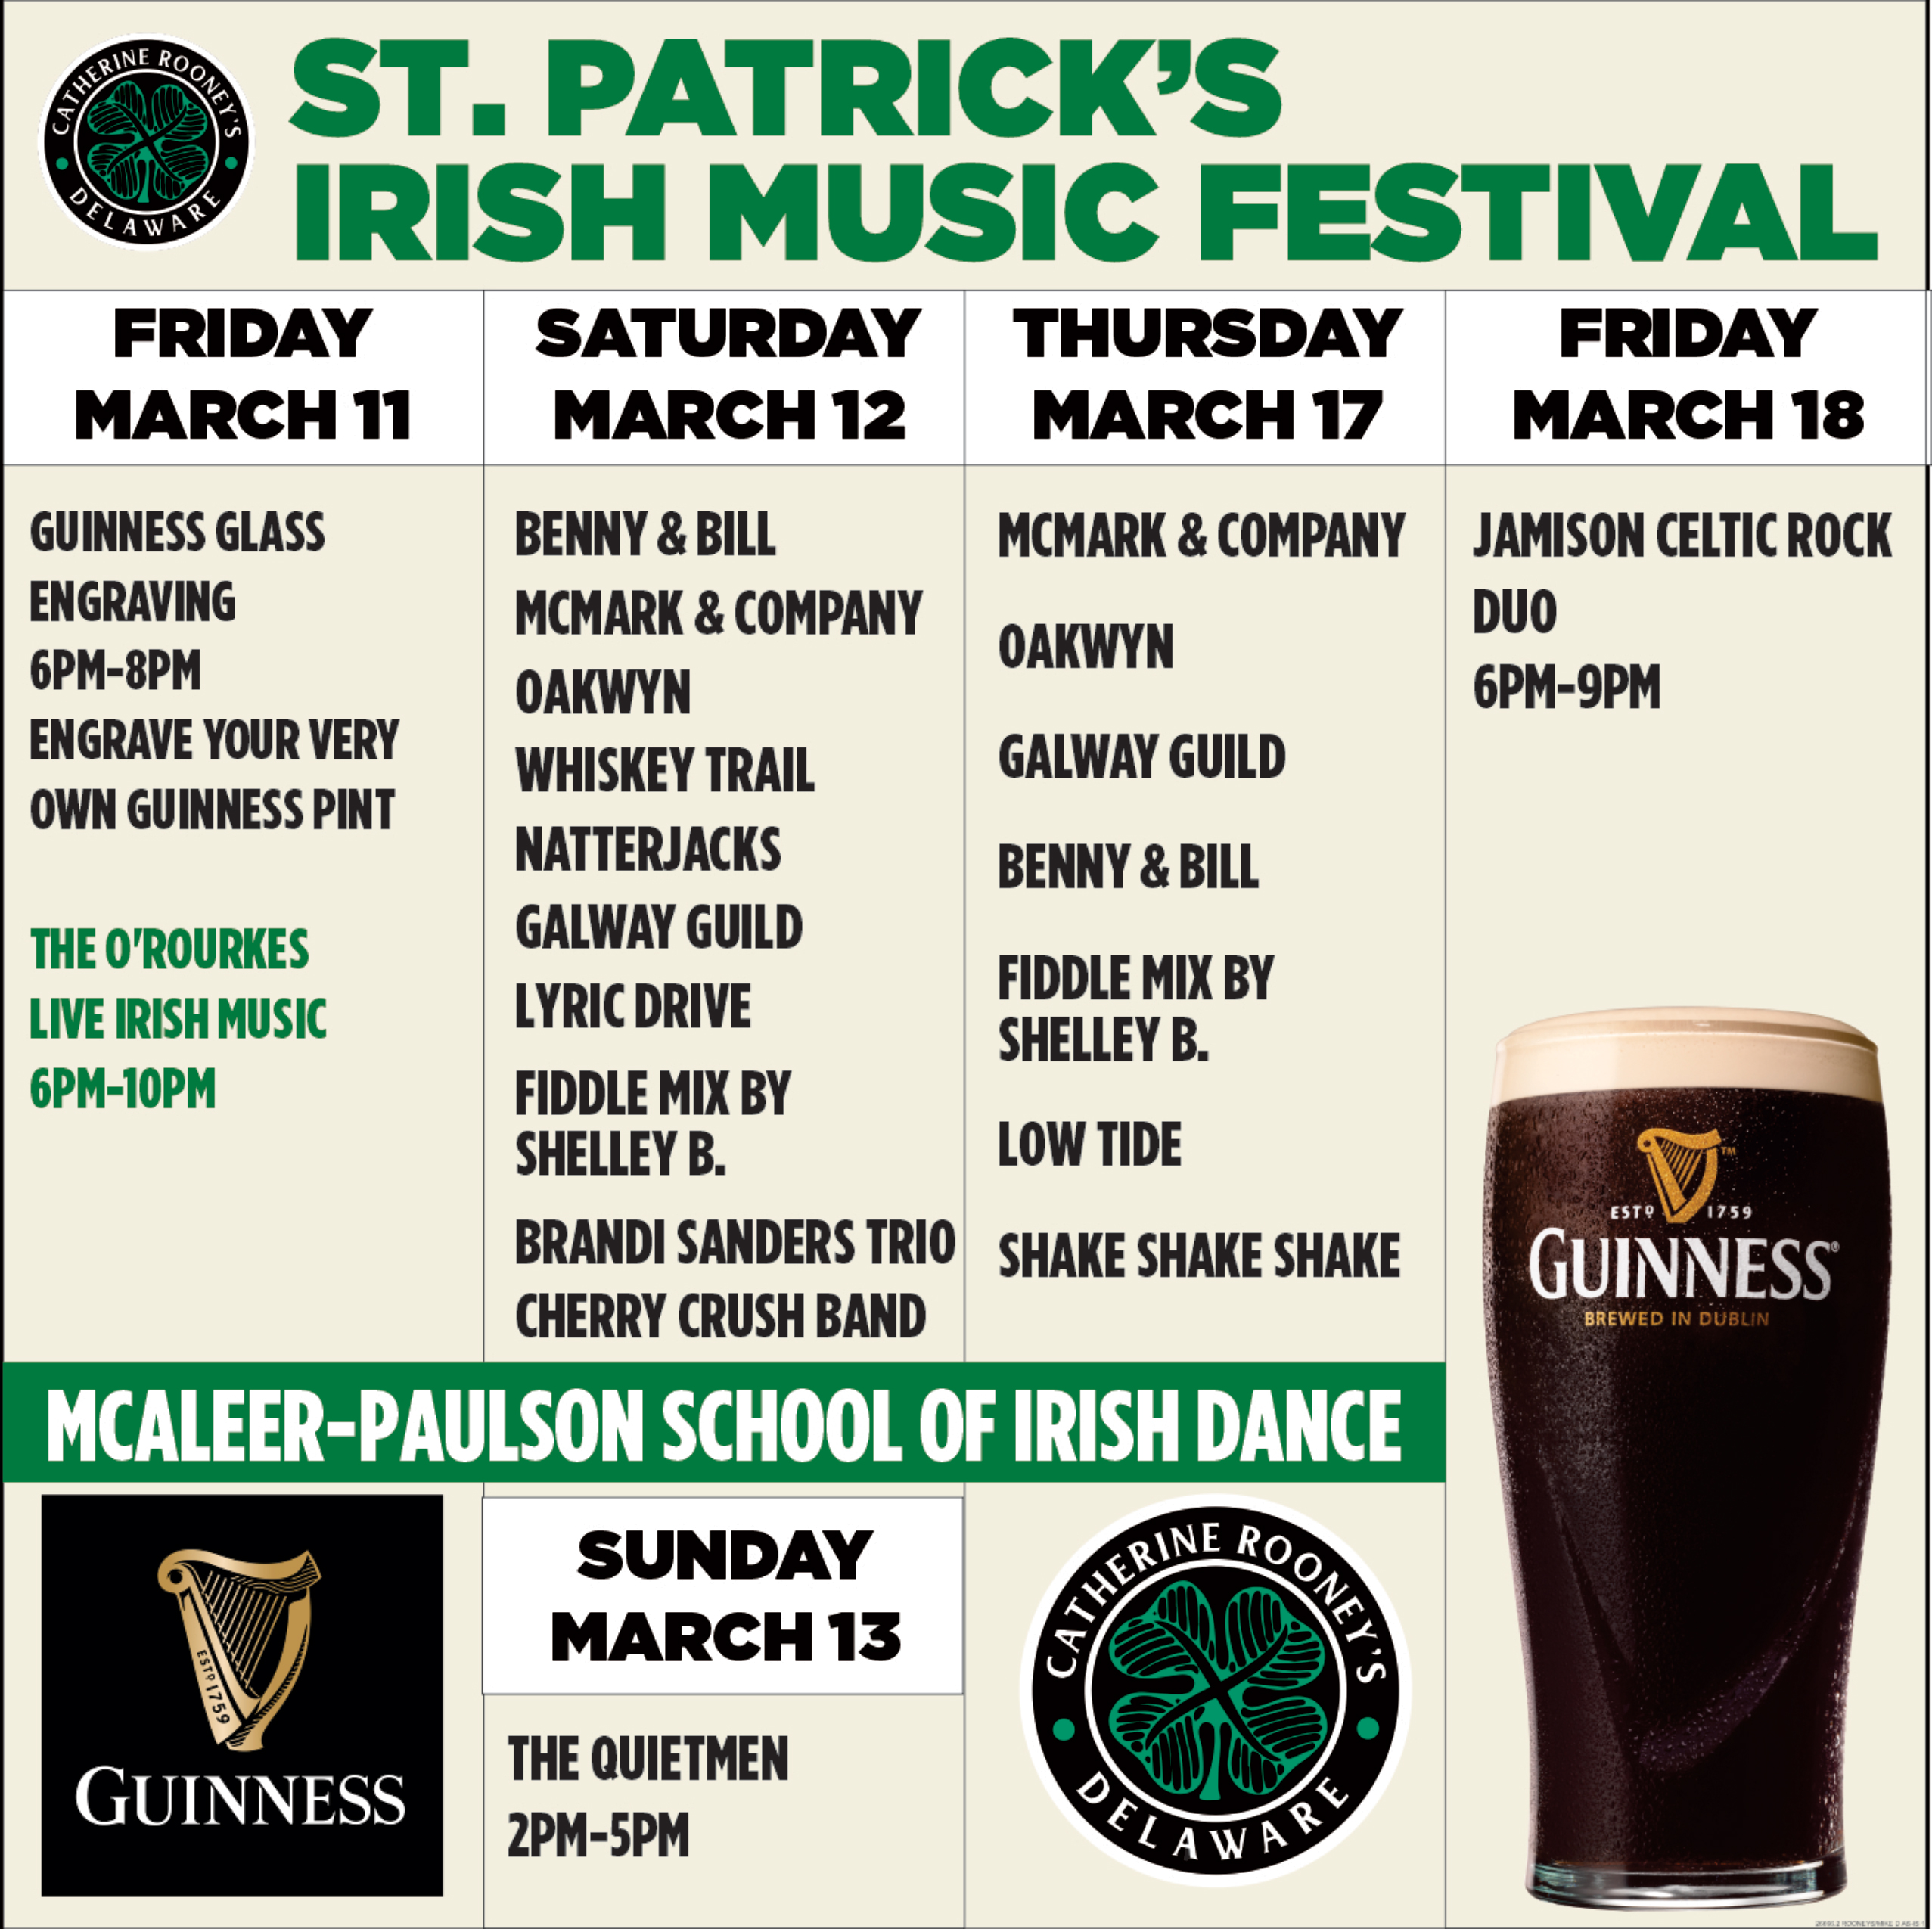 St.Patrick's Irish Music Festival Sunday, Mar 13, 2022 from 200pm to